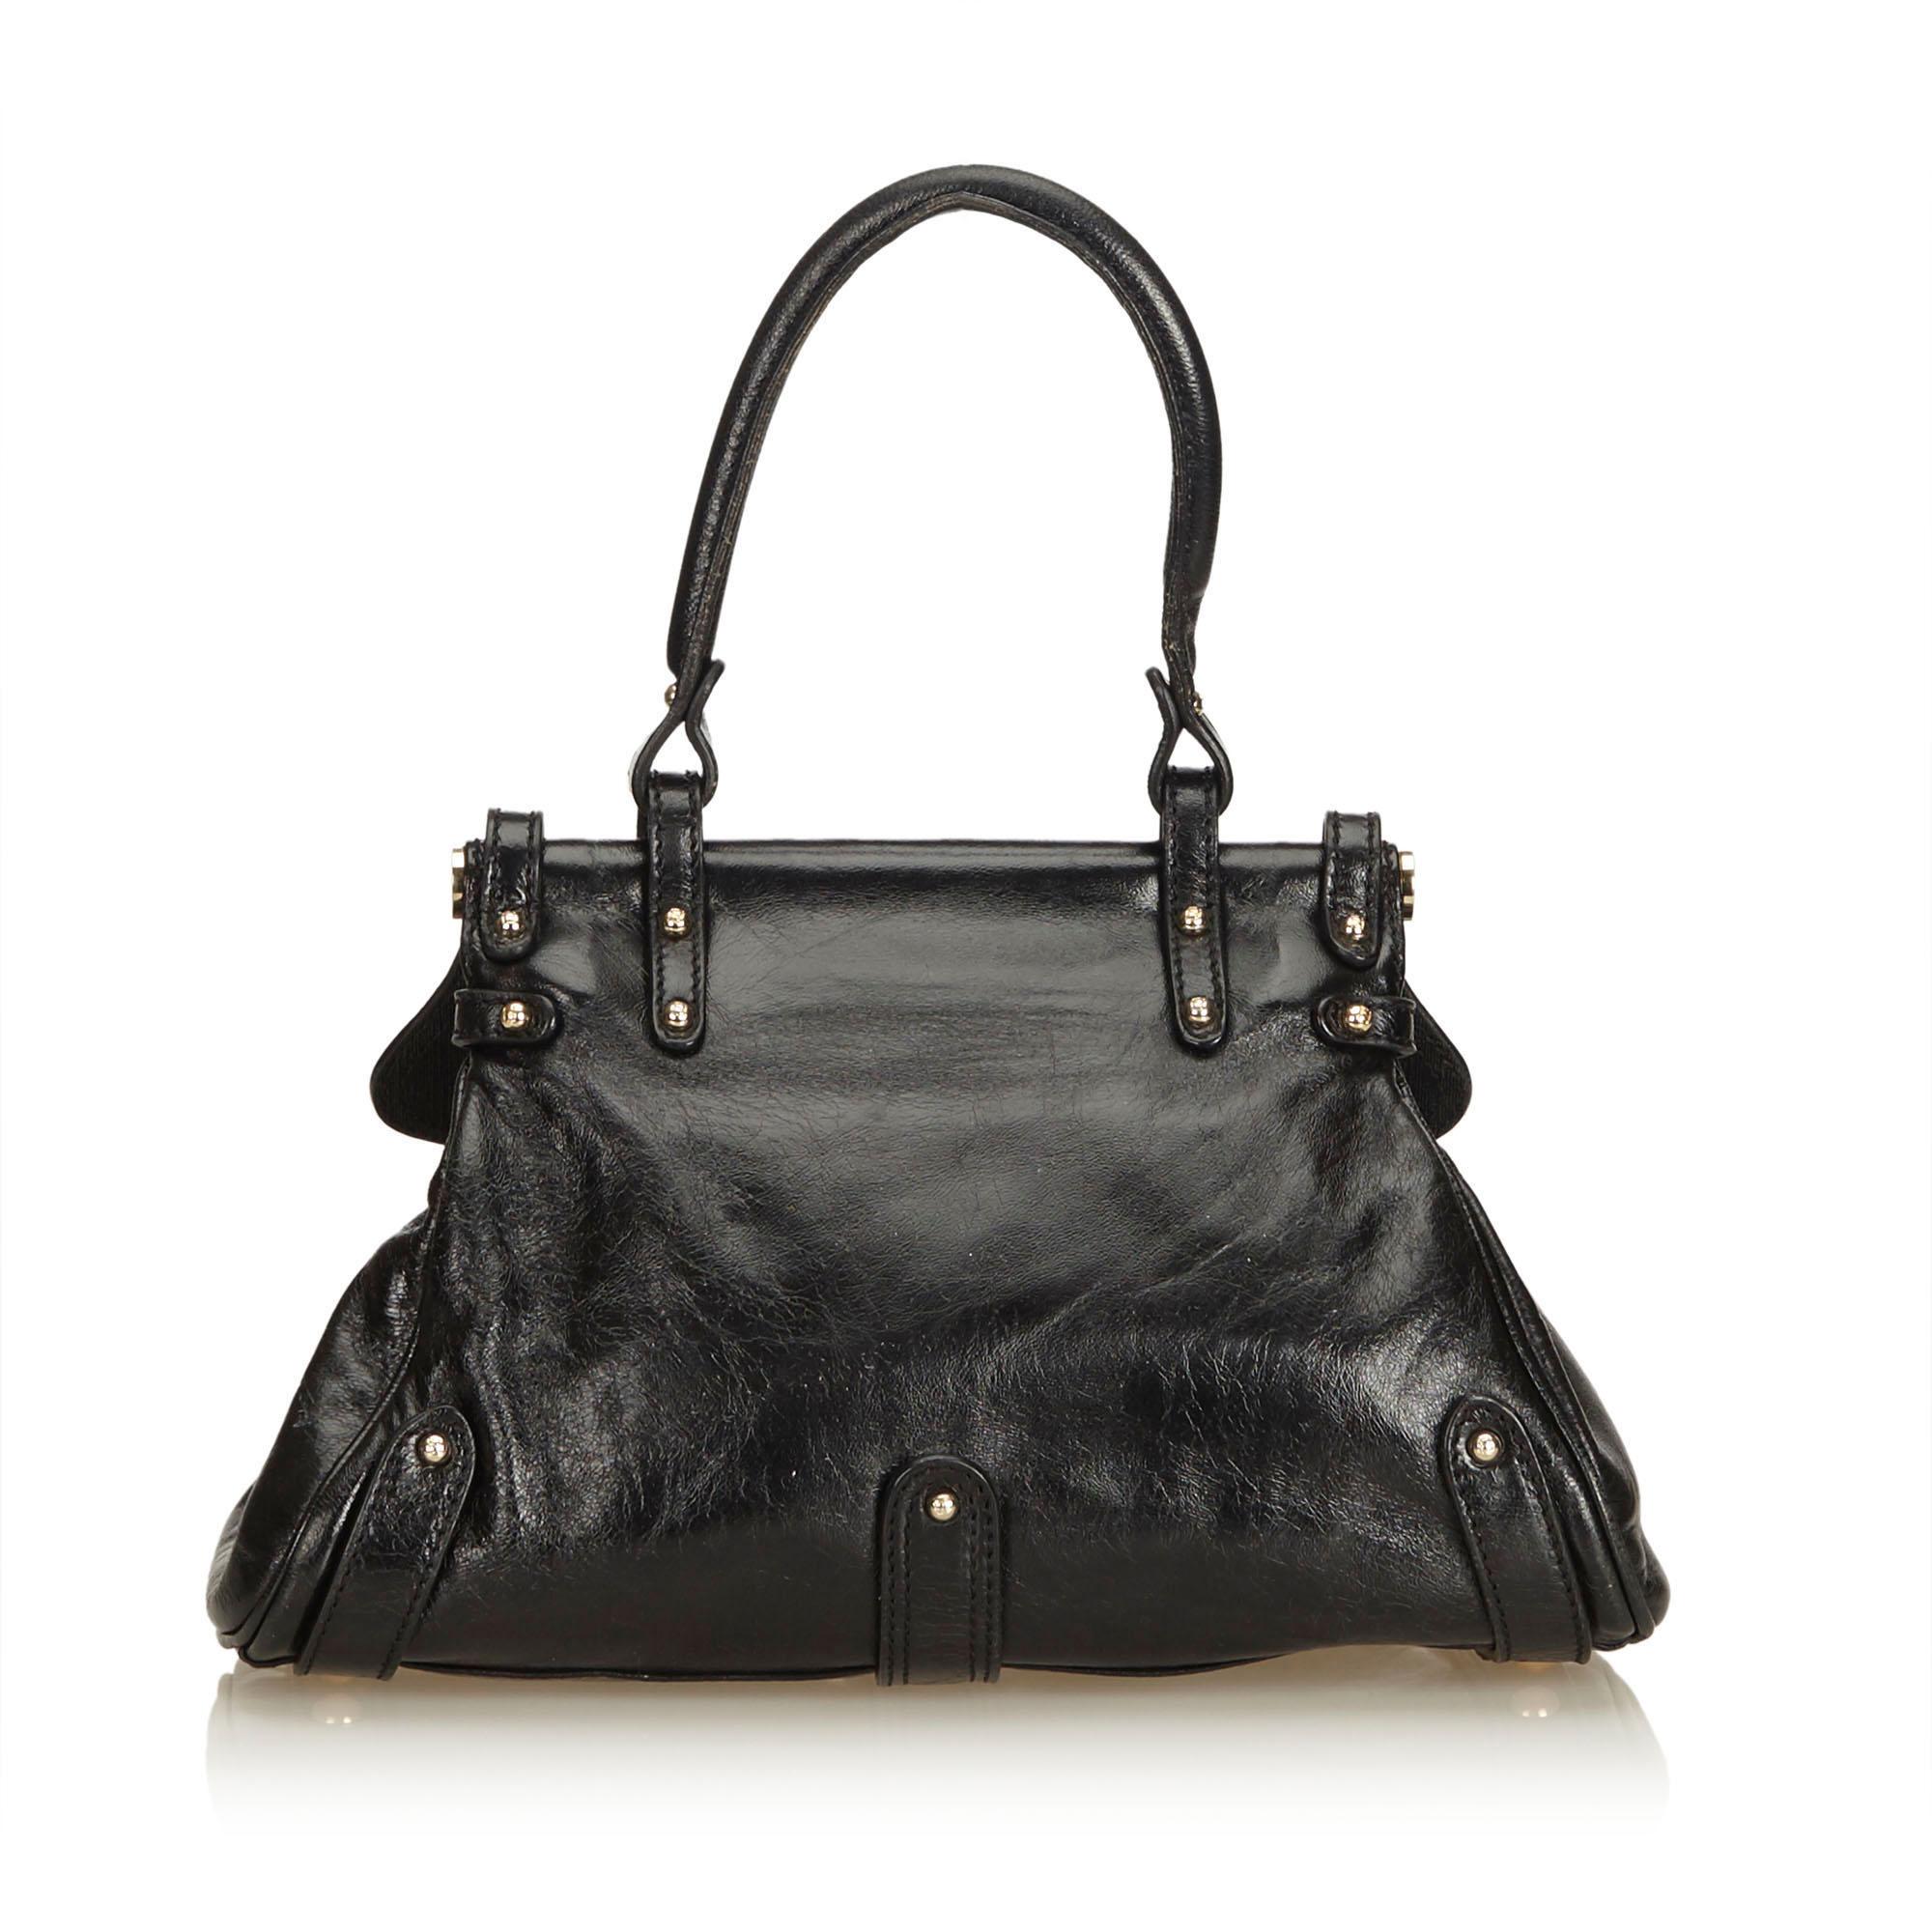 Fendi Black Leather Handbag In Good Condition For Sale In Orlando, FL